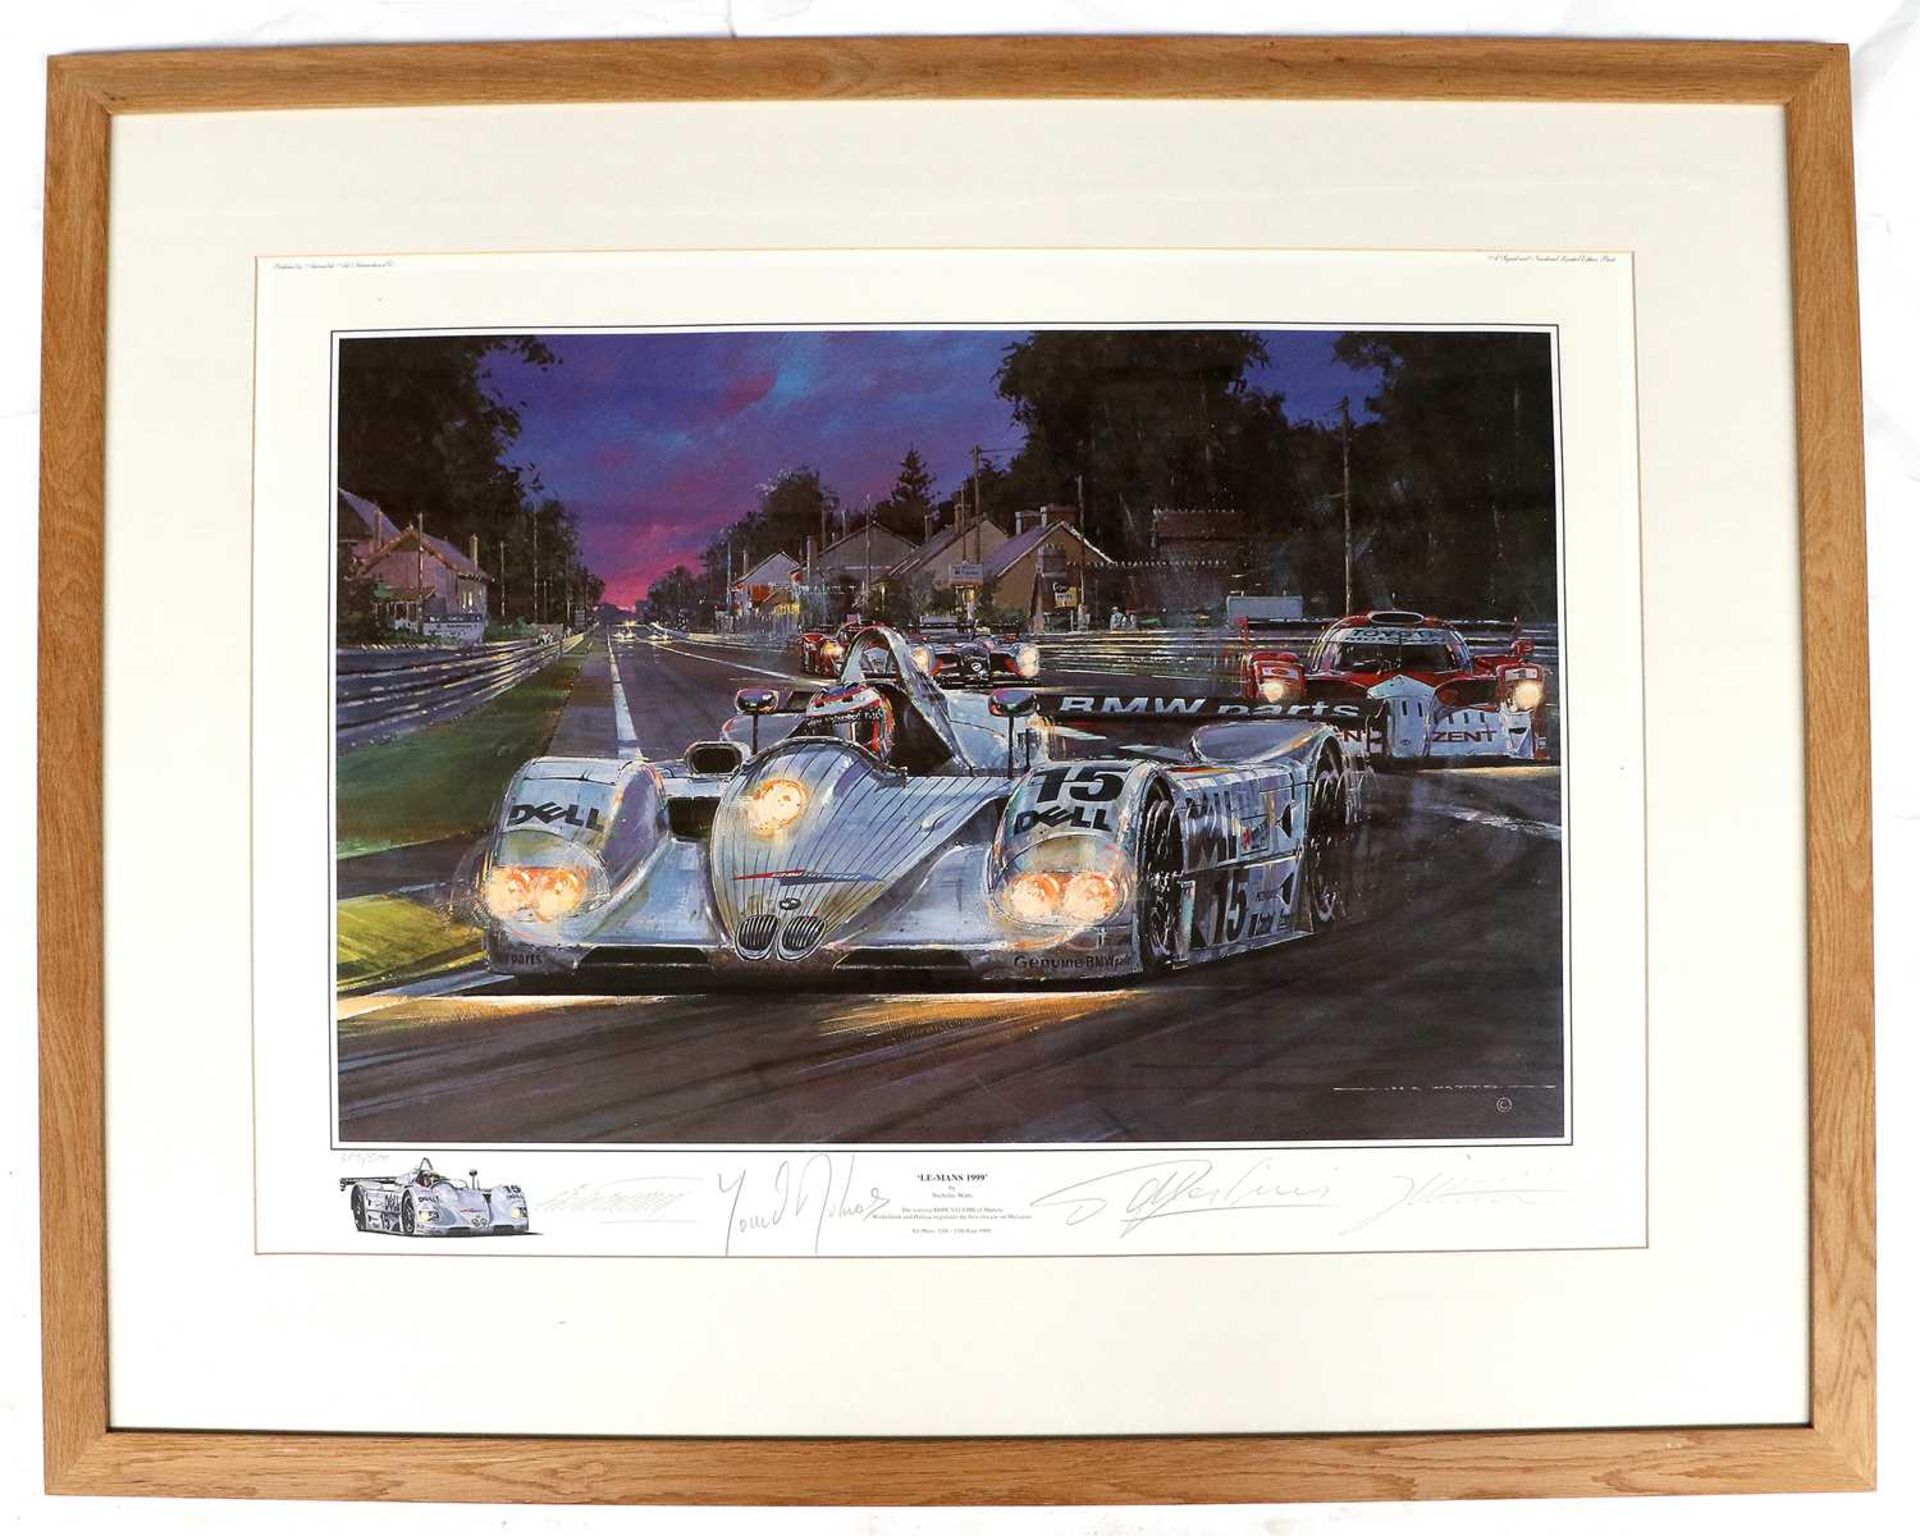 After Nicholas Watts "Le Mans 1999 Winning BMW V12 LMR of Martini, Winkelhock and Dalmas